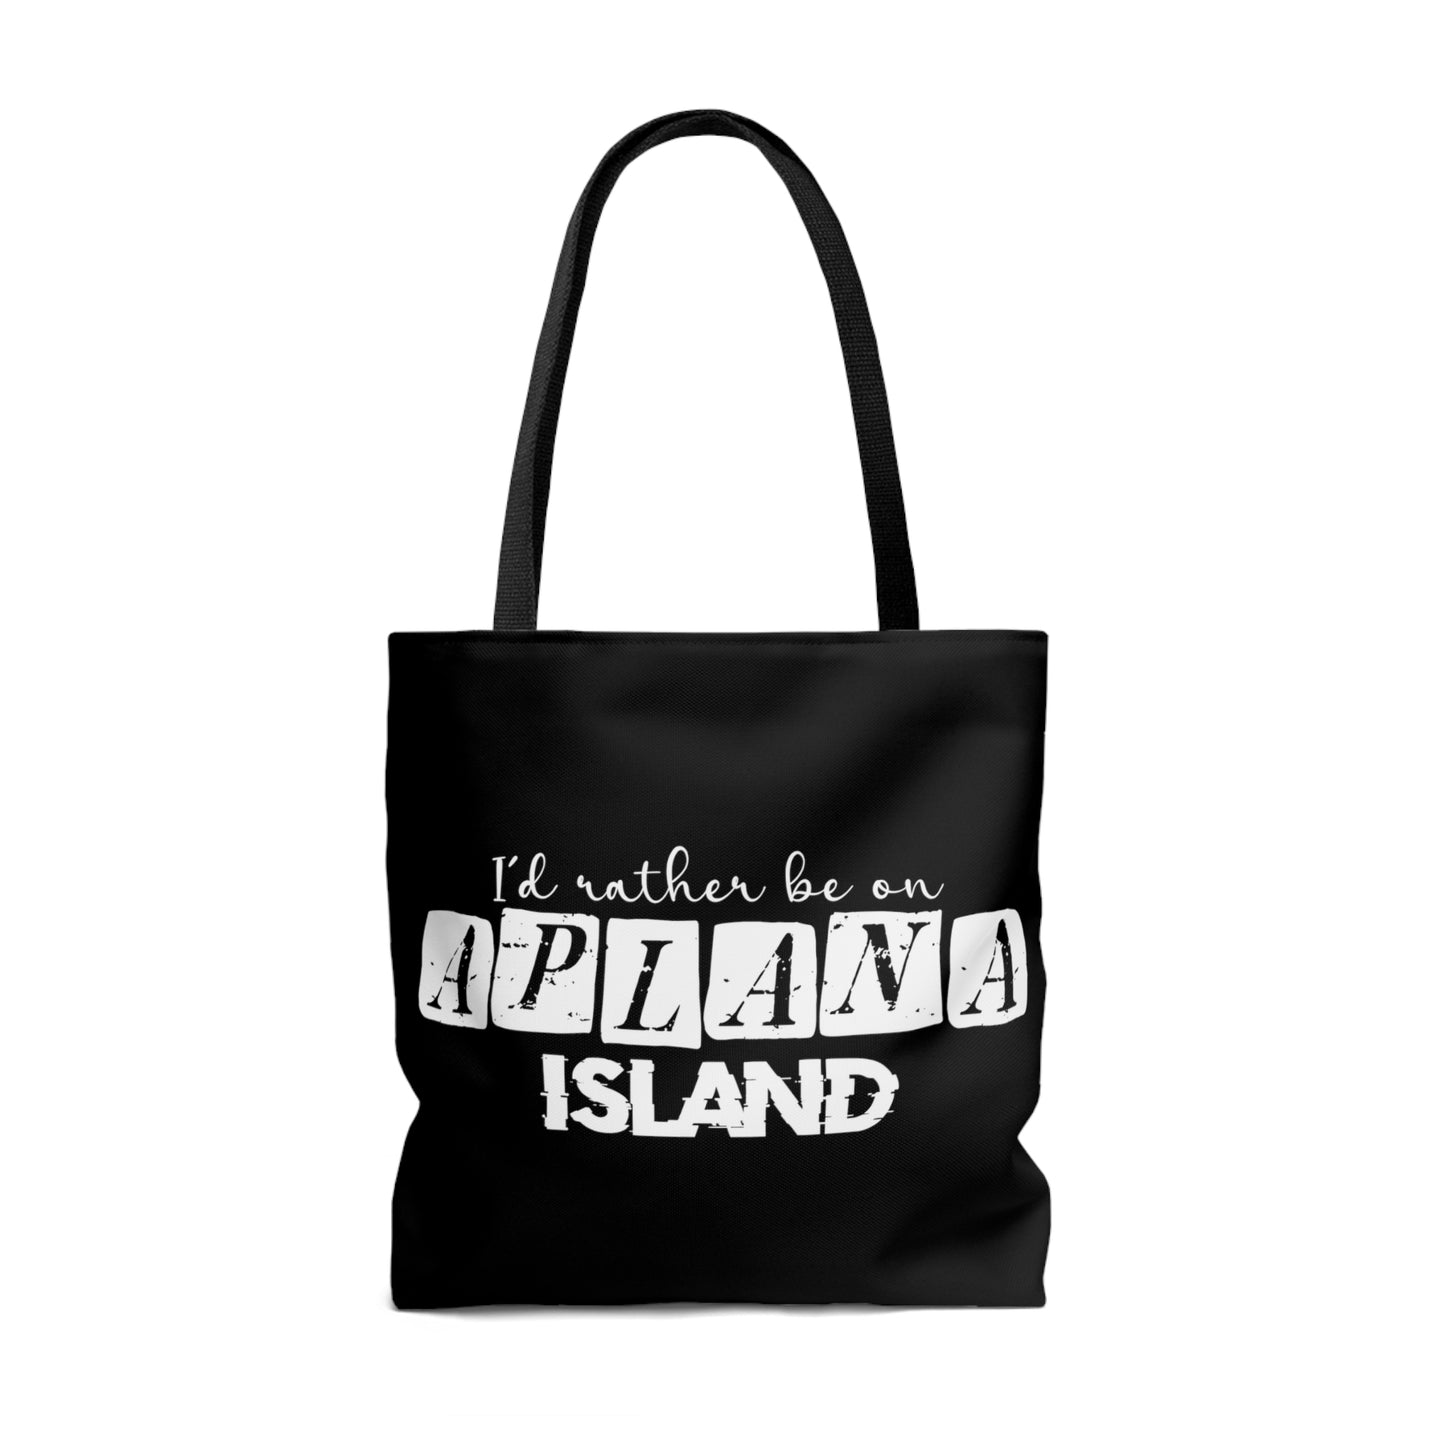 Aplana Island Bag